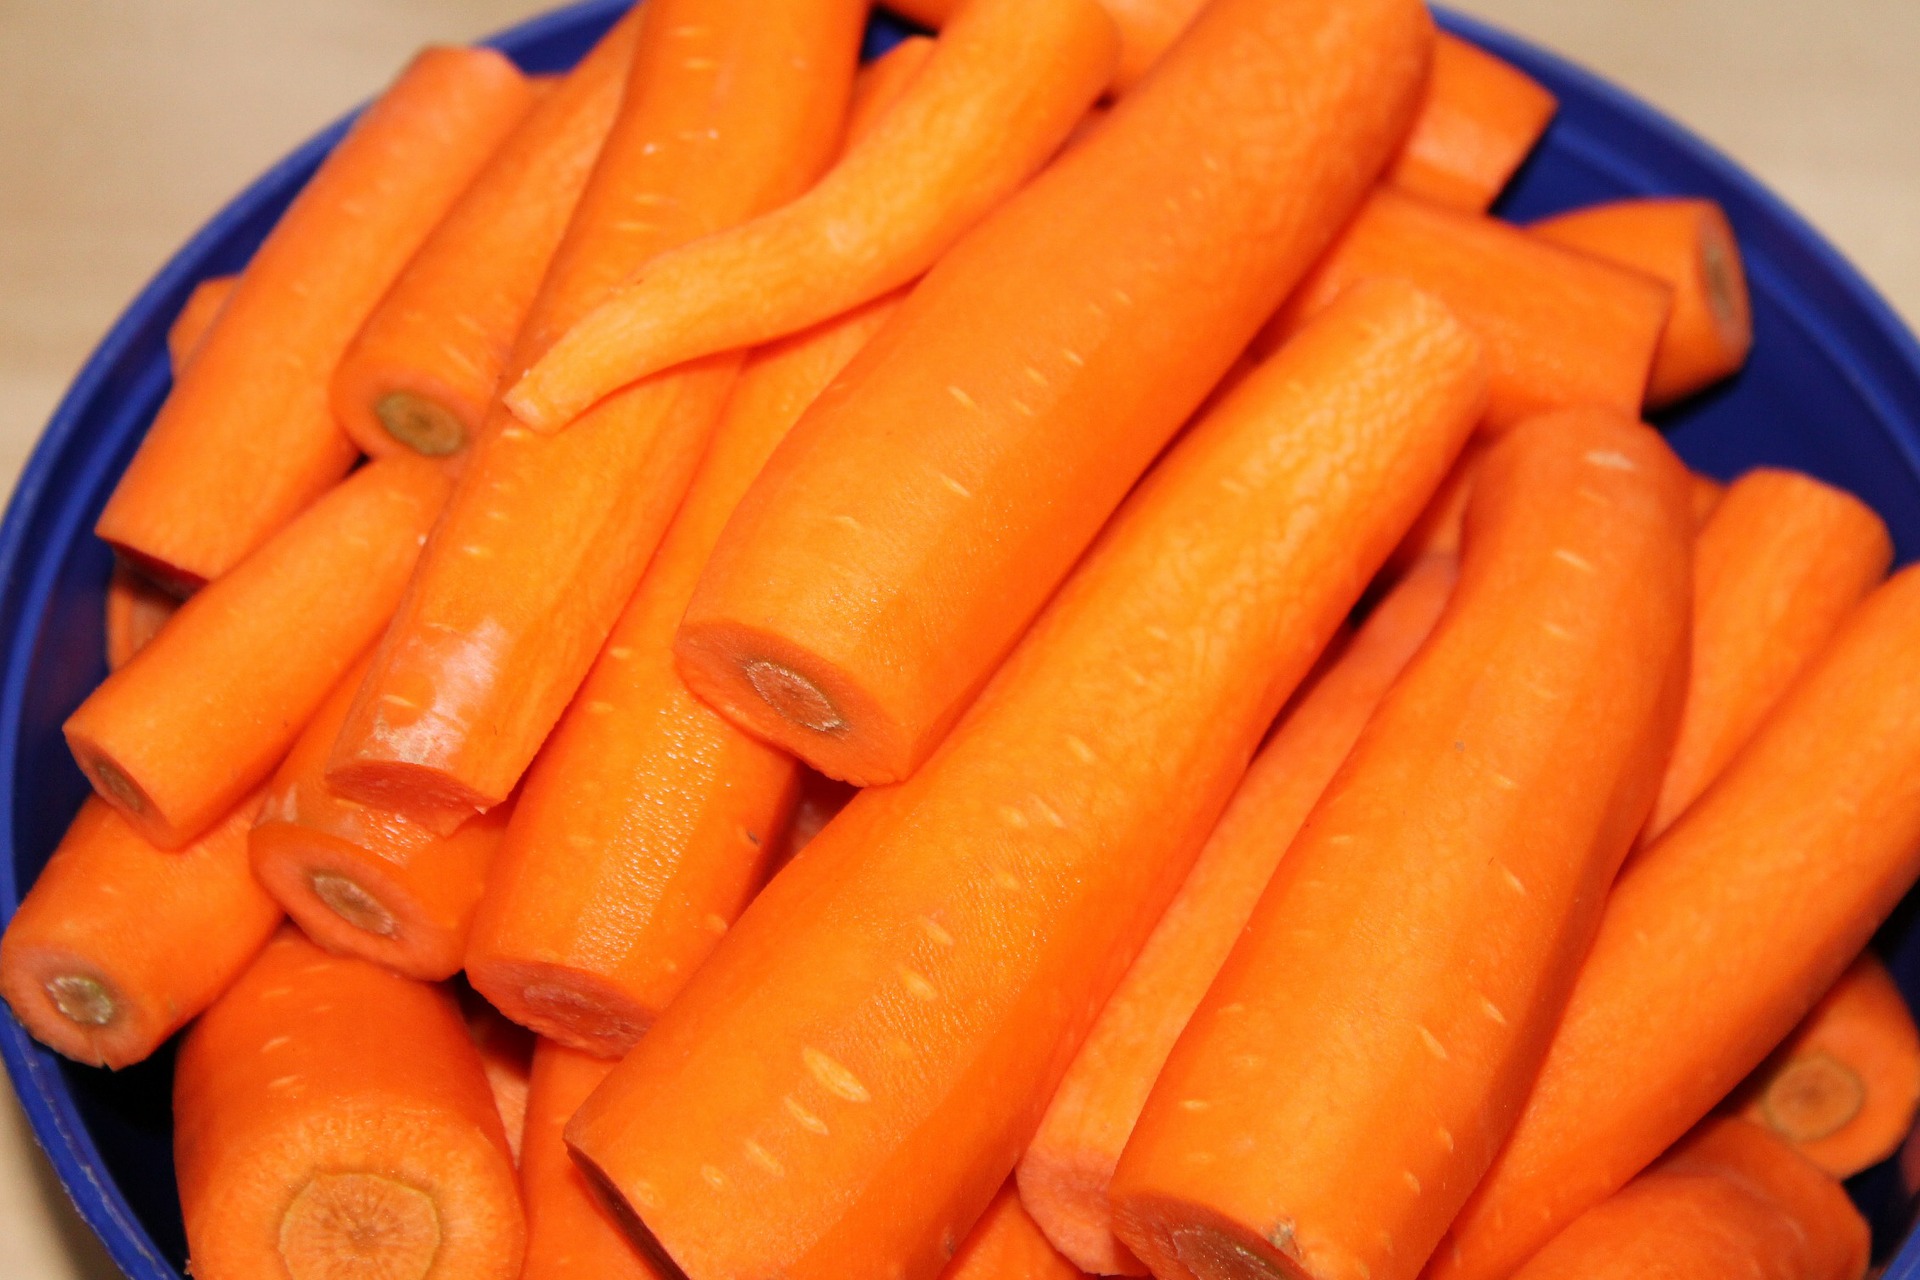 zanahorias en tu dieta diaria